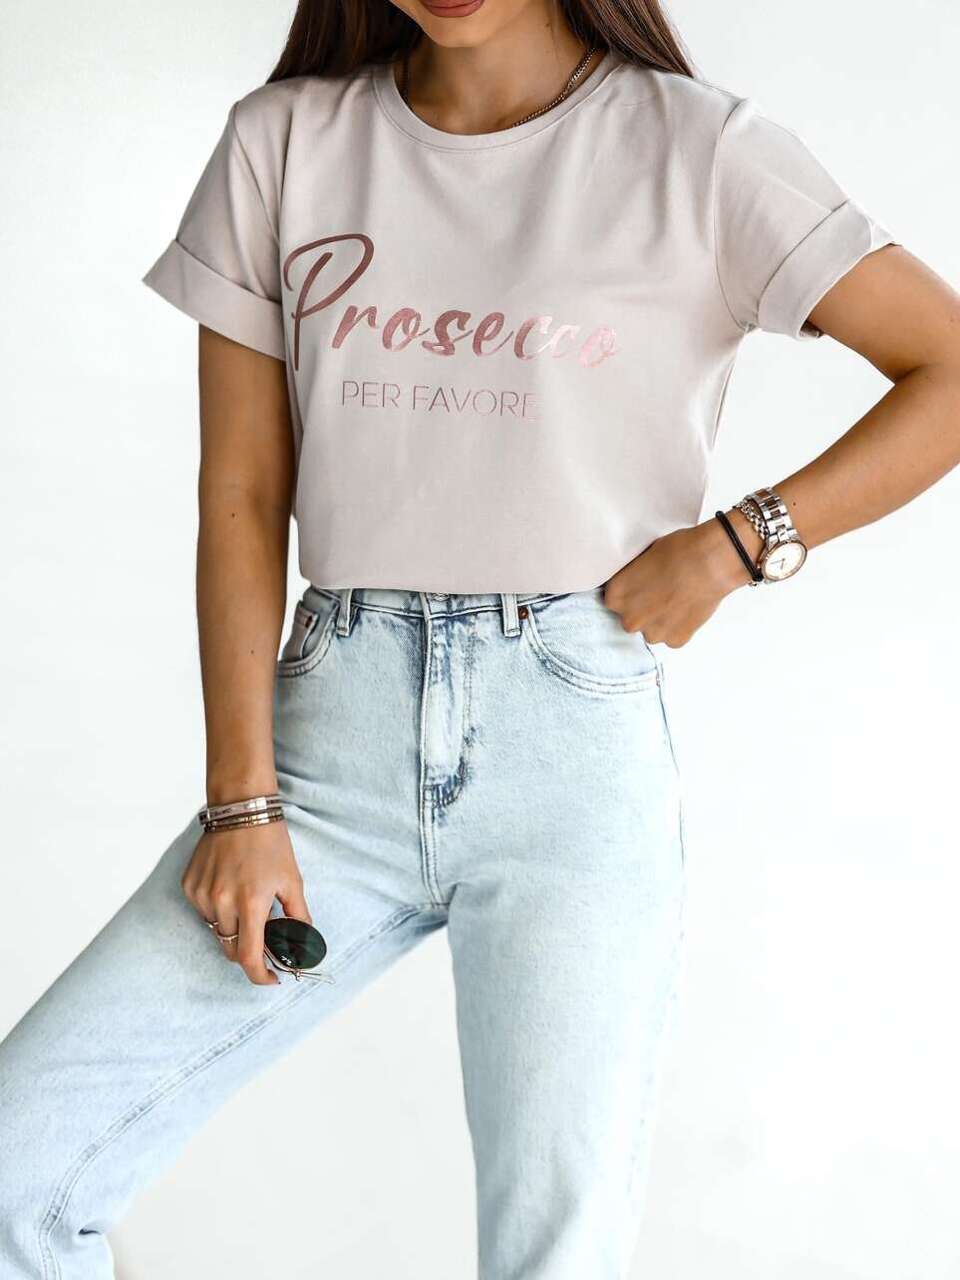 T-shirt PROSECCO per favore